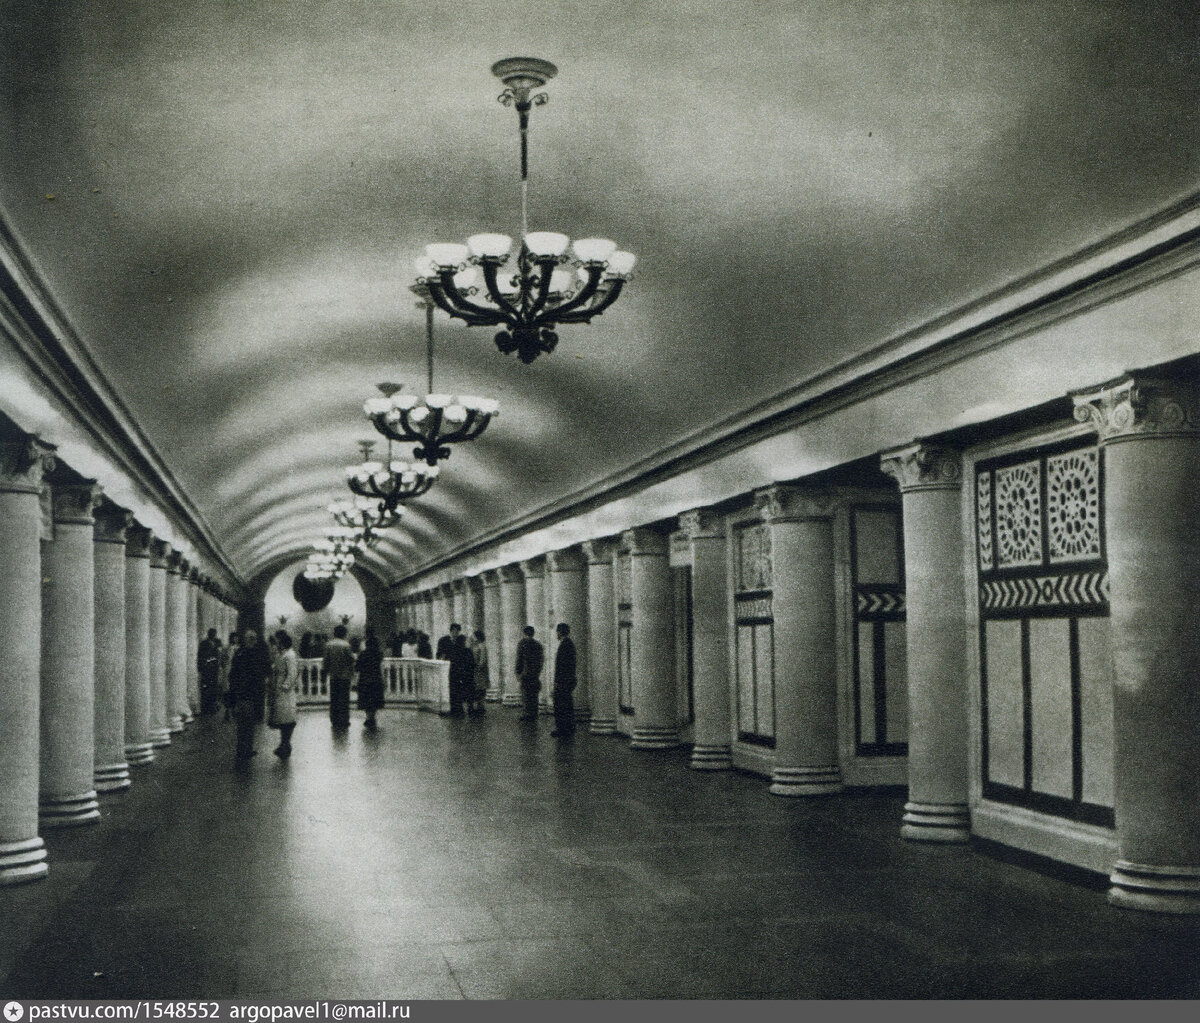 Станция павелецкая кольцевая. Метро Павелецкая. Центральный зал новой галереи 1888.